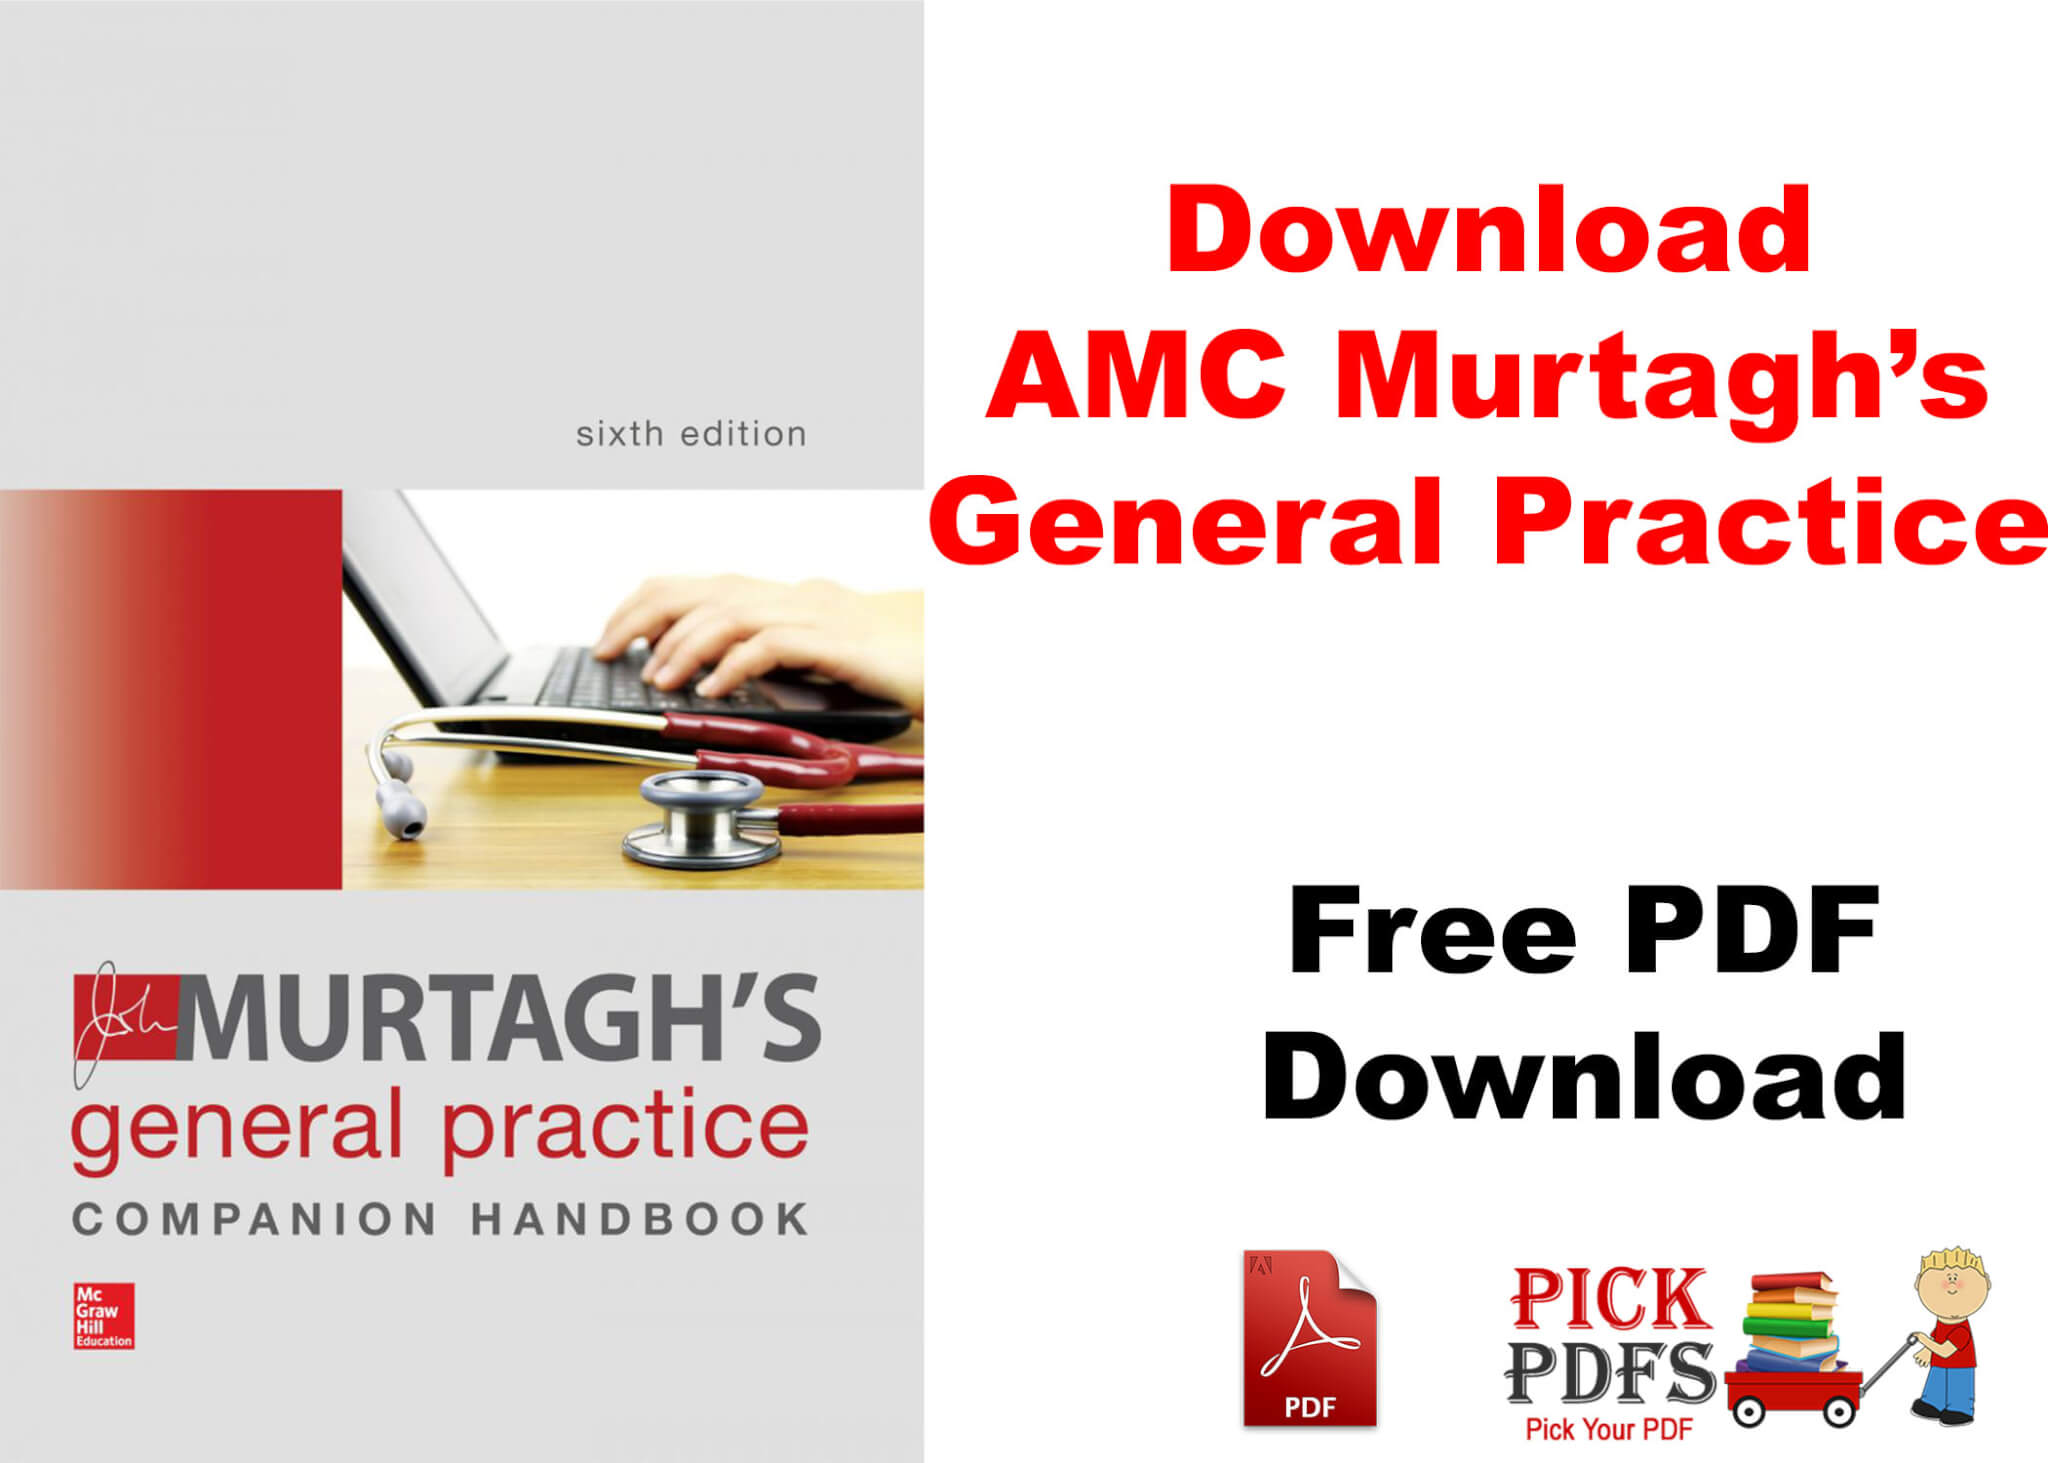 amc free pdf download